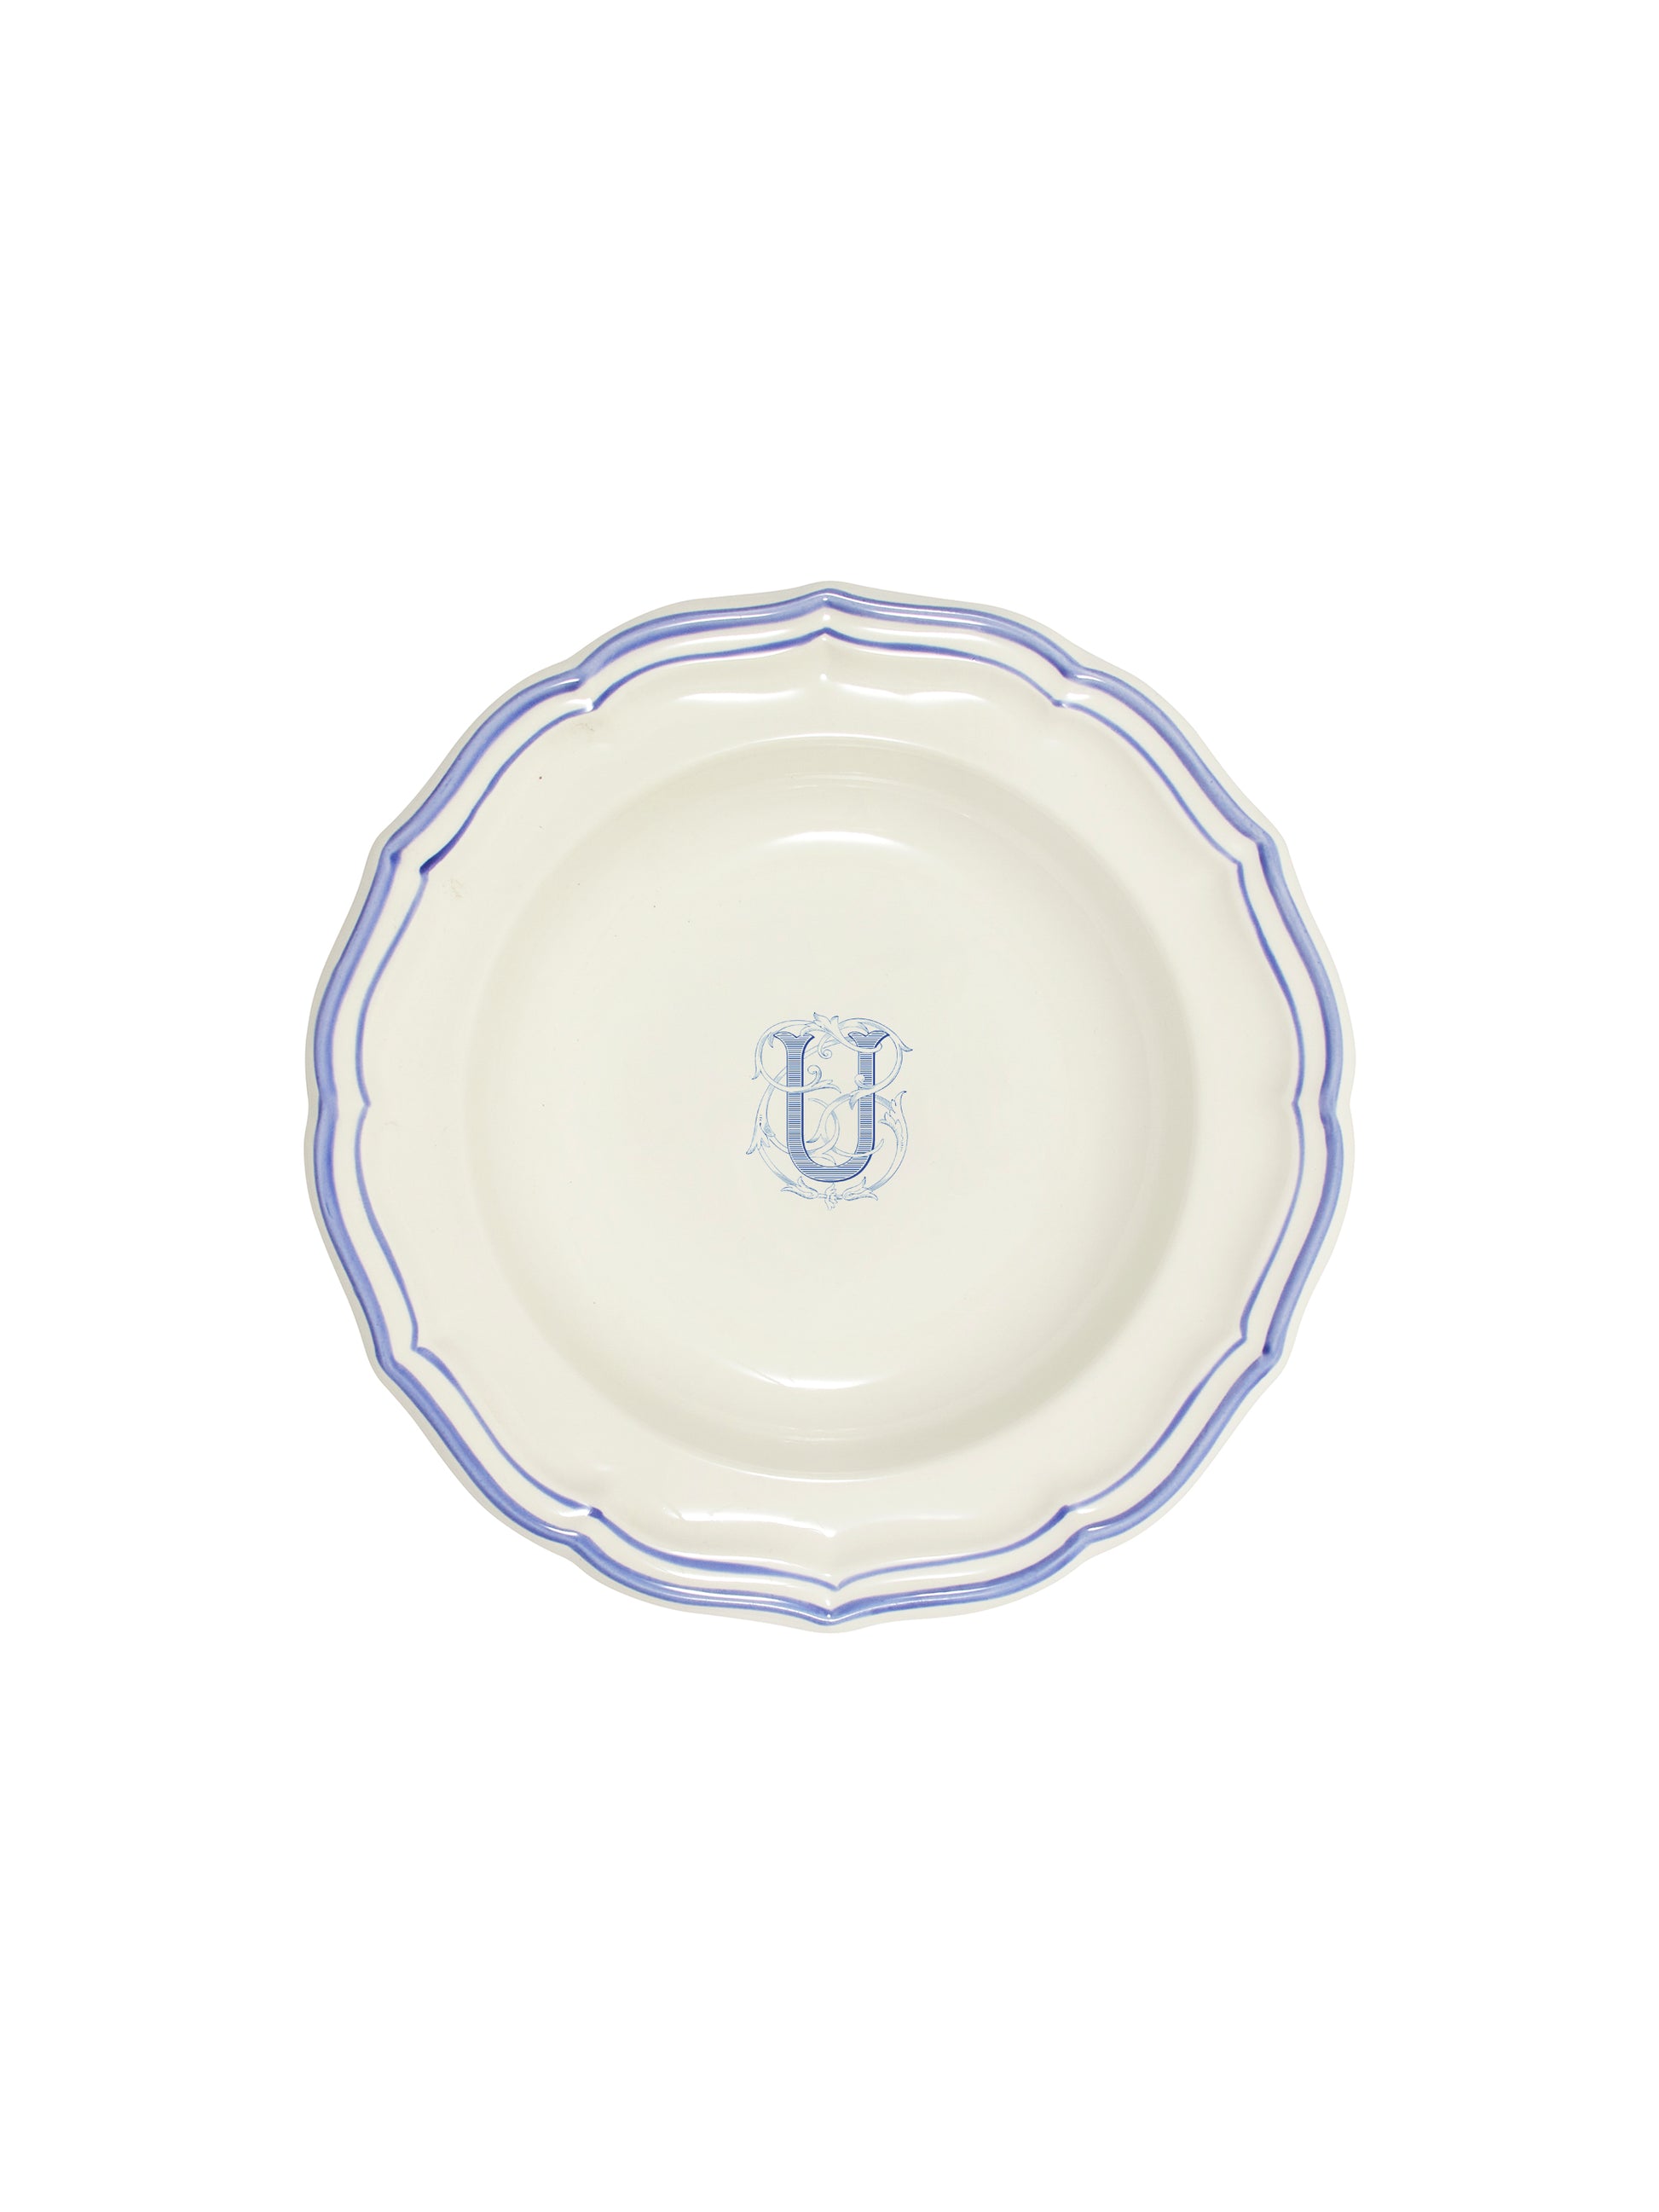 Gien Filet Bleu Monogram Soup Plate U Weston Table